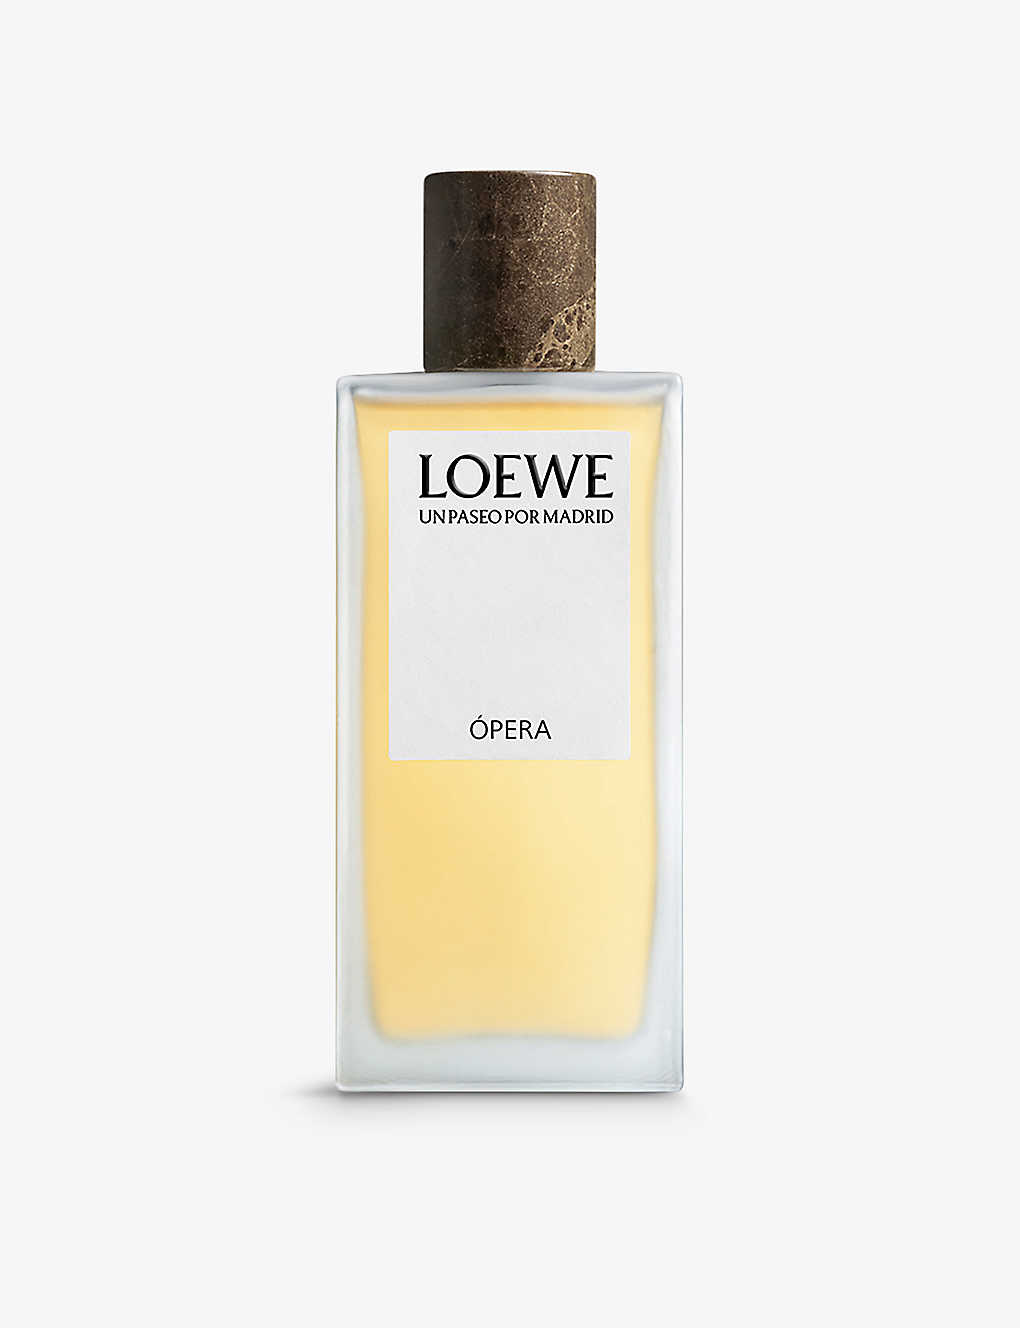 Loewe Un Paseo Por Madrid Ópera Eau De Parfum